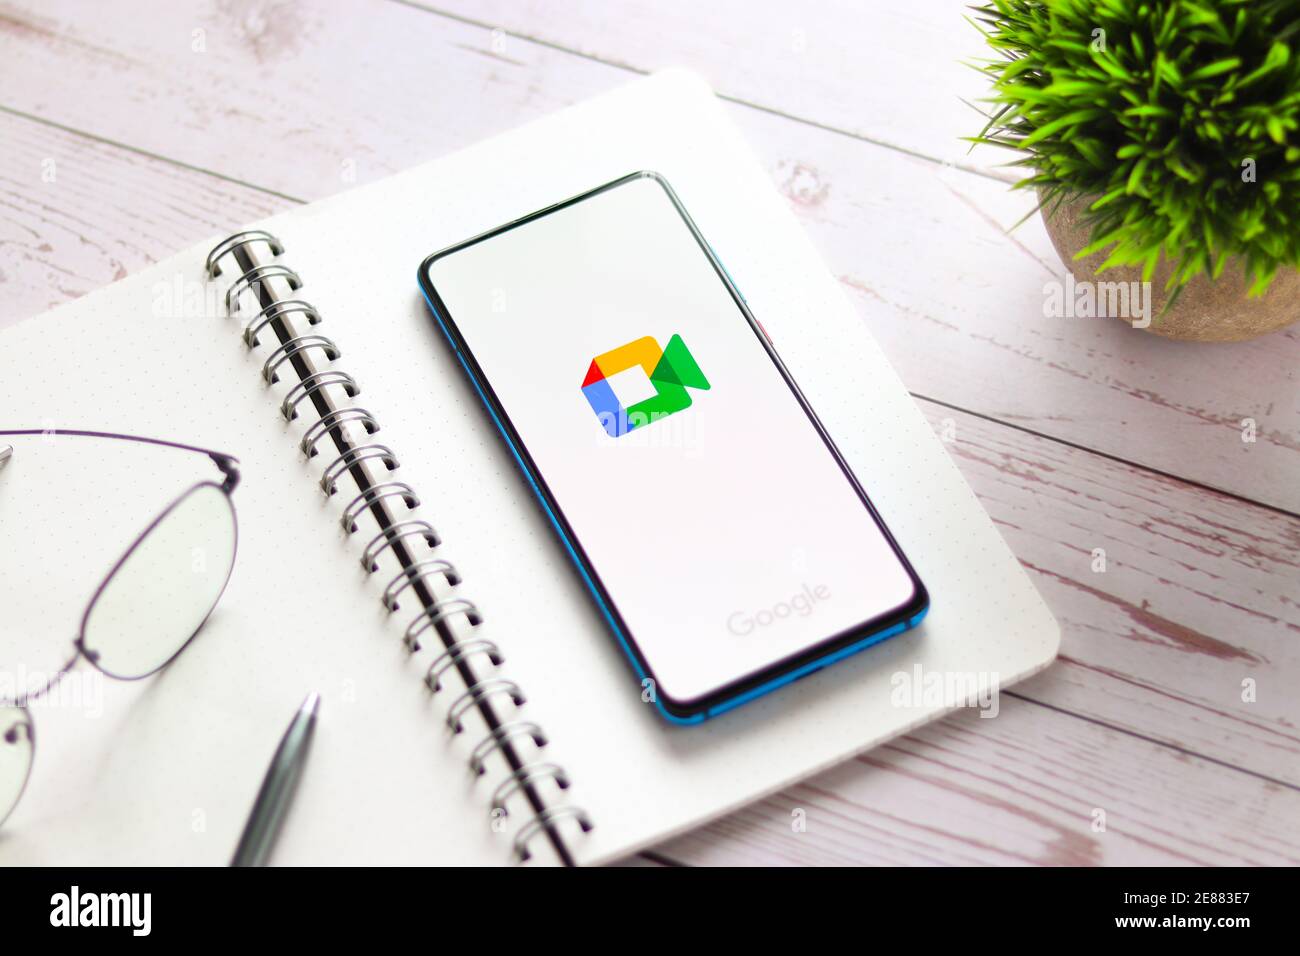 Assam, indien - Januar 31, 2021 : Google meet Logo auf Handy-Bildschirm Stock Bild. Stockfoto